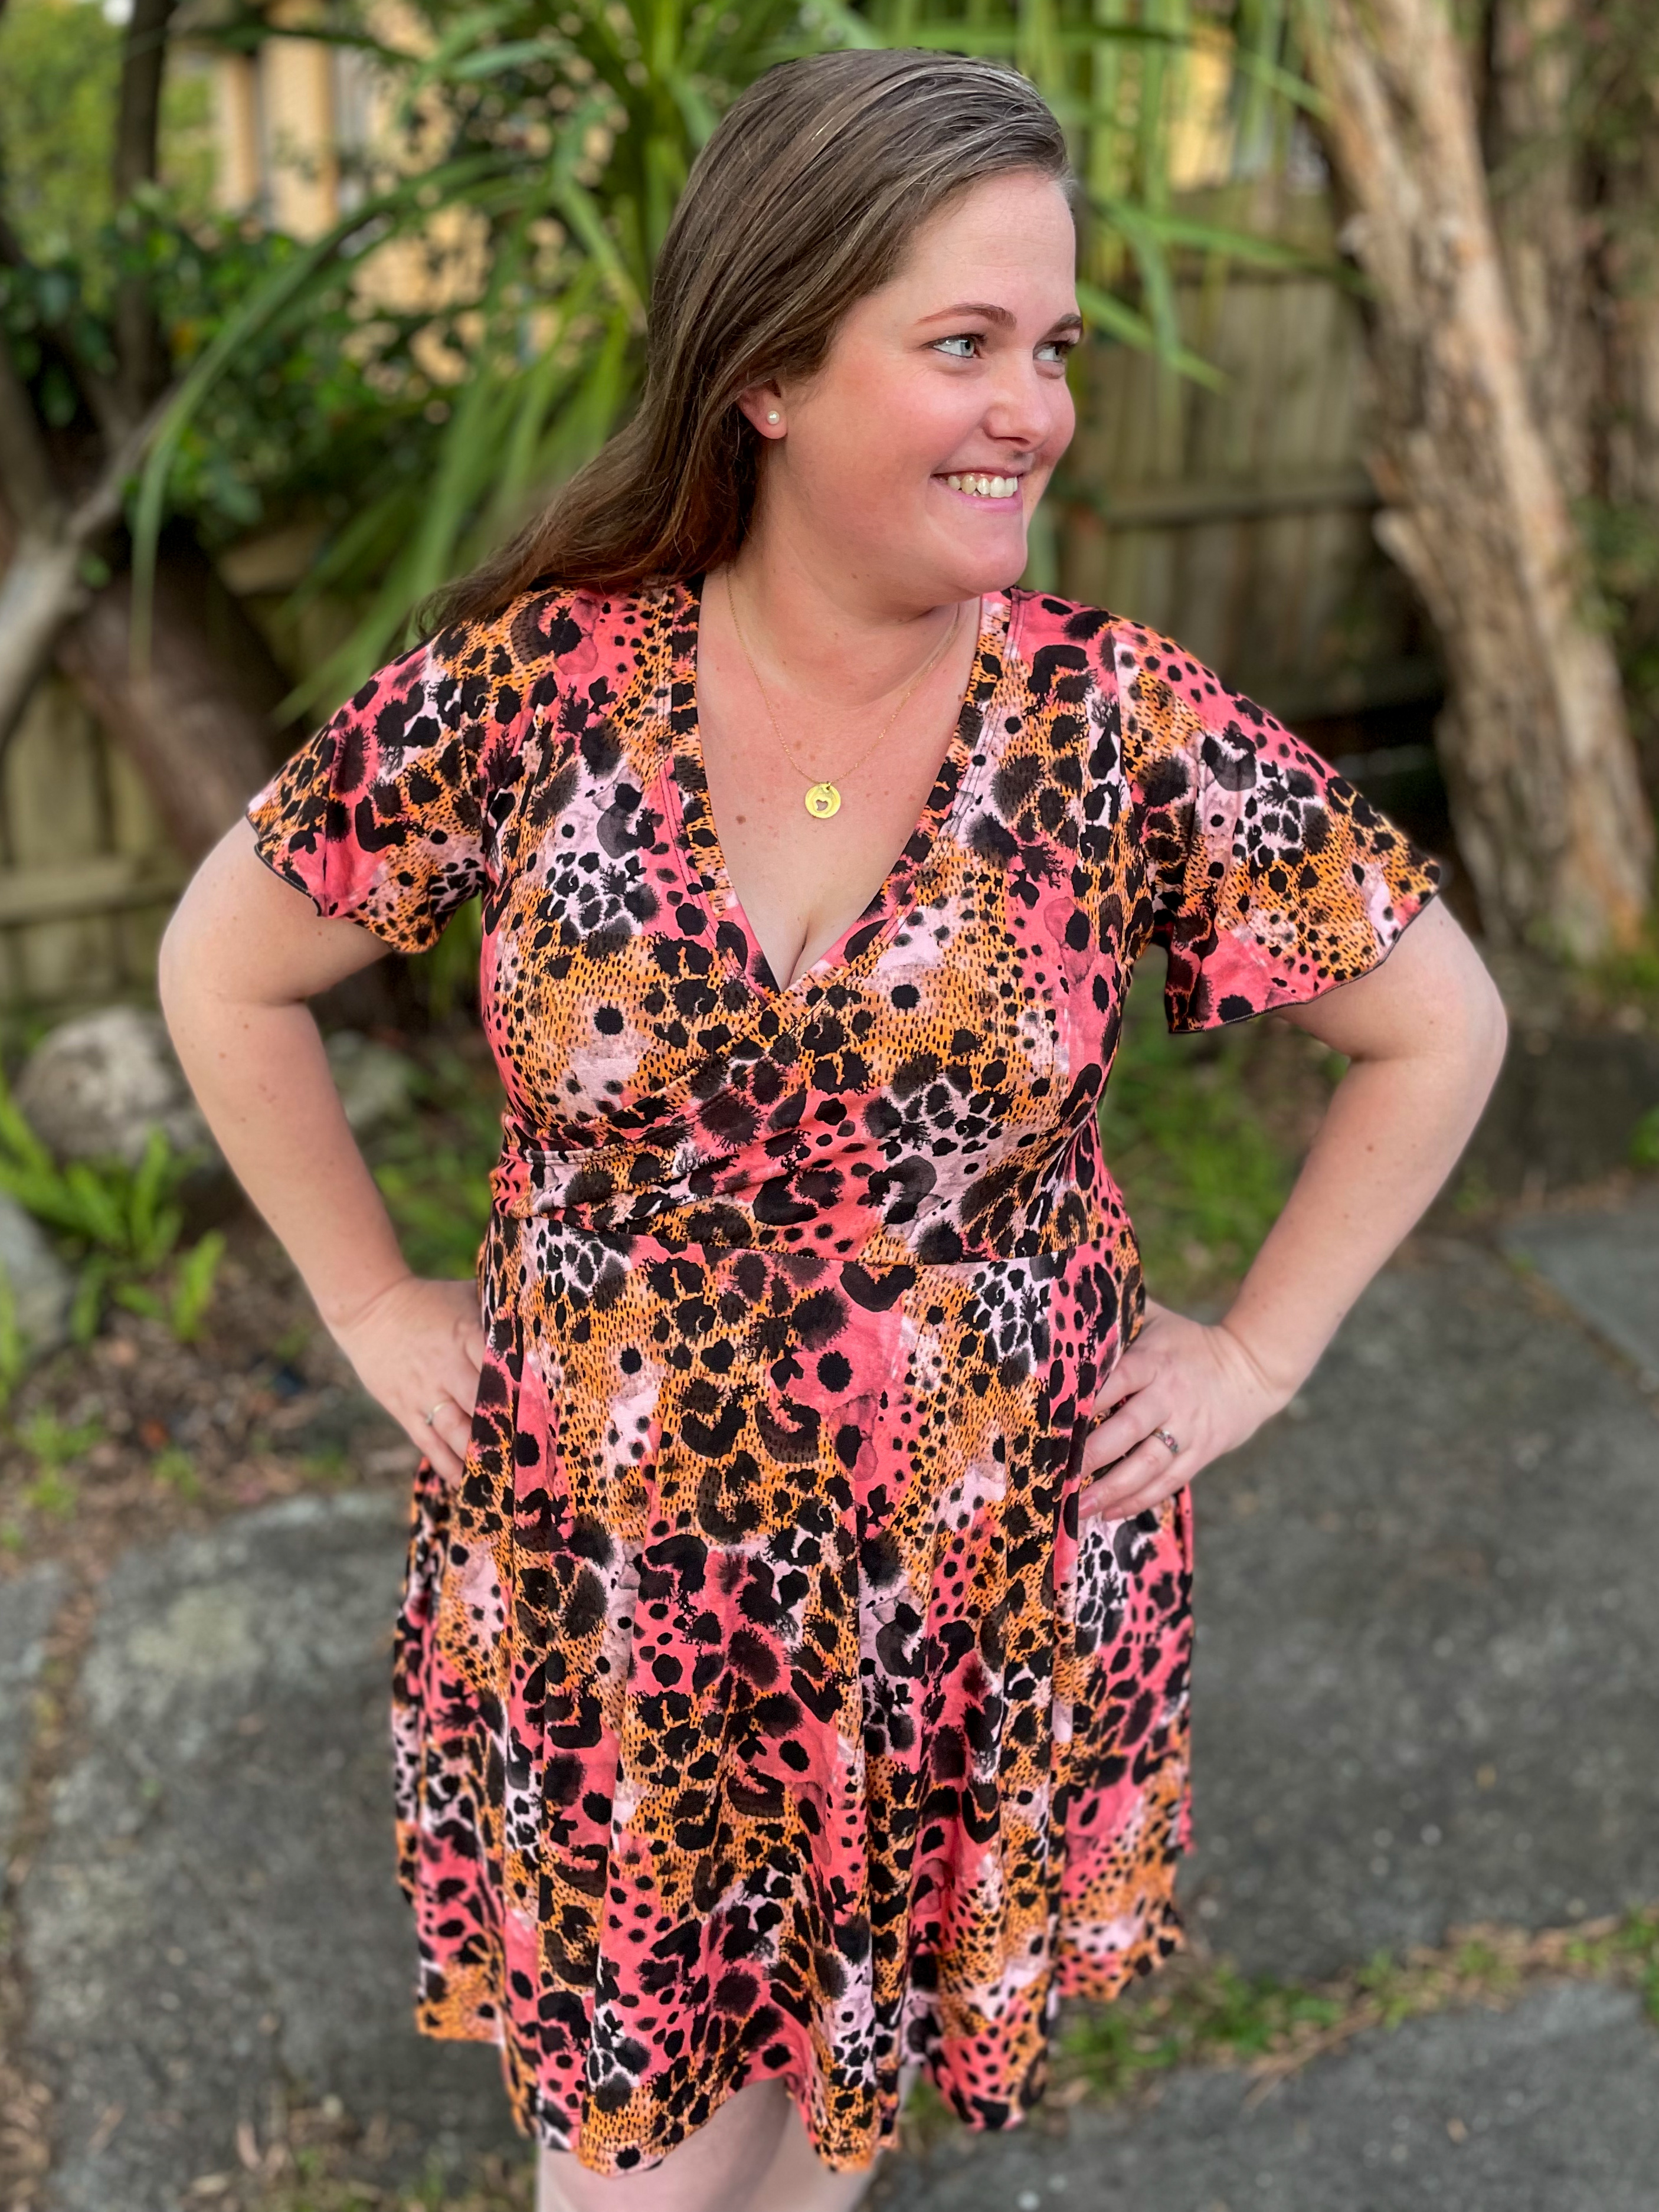 Fashionable woman posing in leopard print dress.